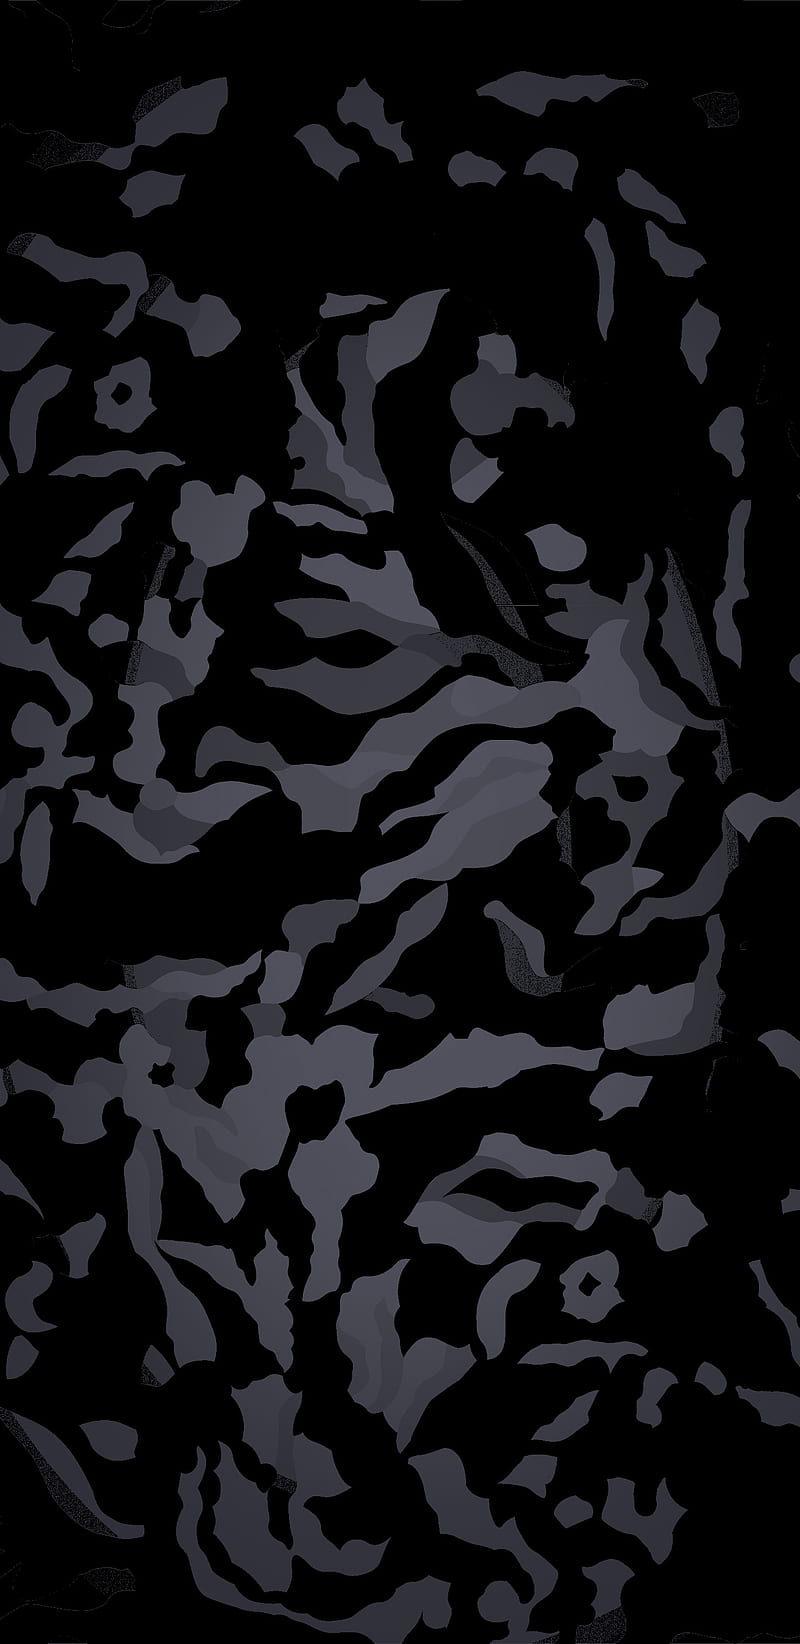 Black Commando Camouflage IPhone Wallpaper  IPhone Wallpapers  iPhone  Wallpapers